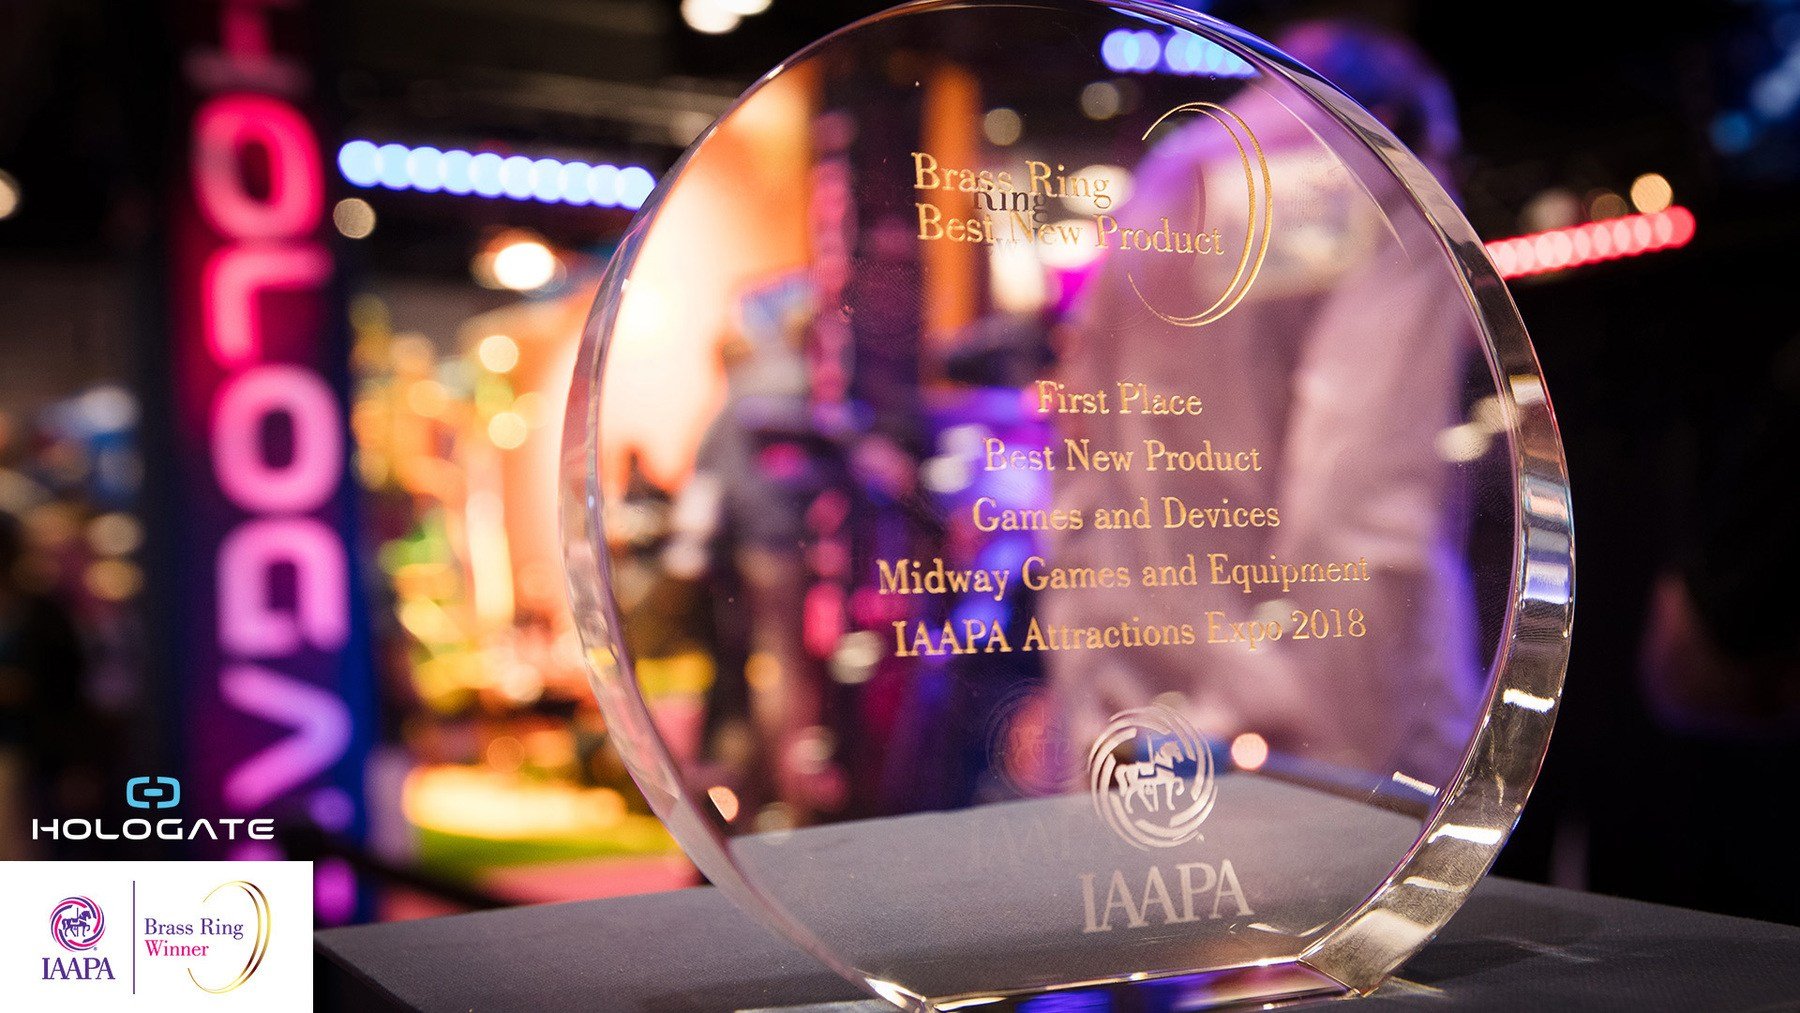 IAAPA Award Winner